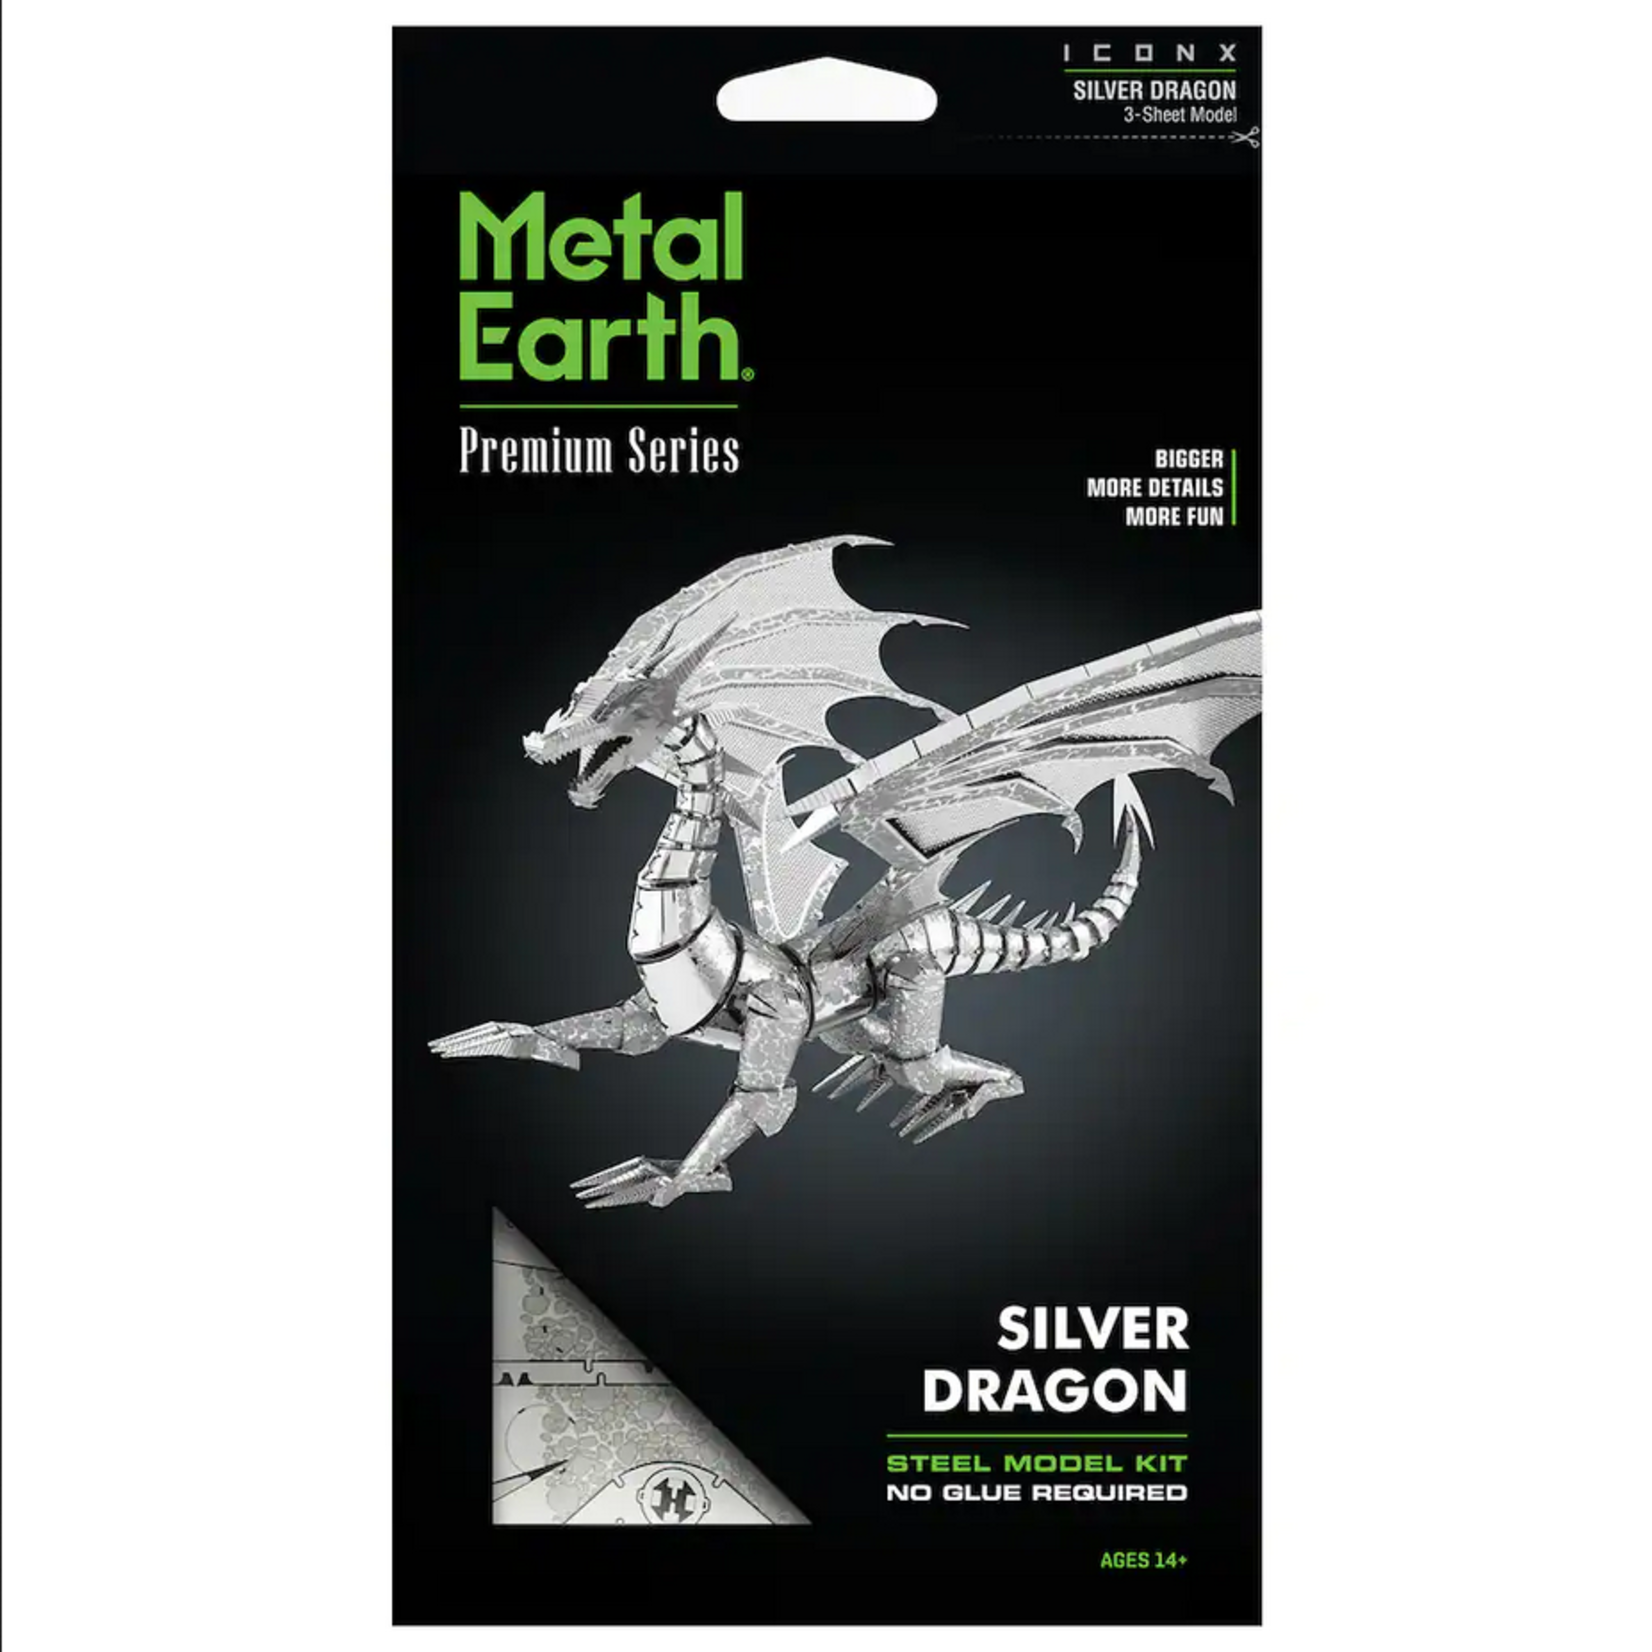 Metal Earth Metal Earth Premium Series - Silver Dragon